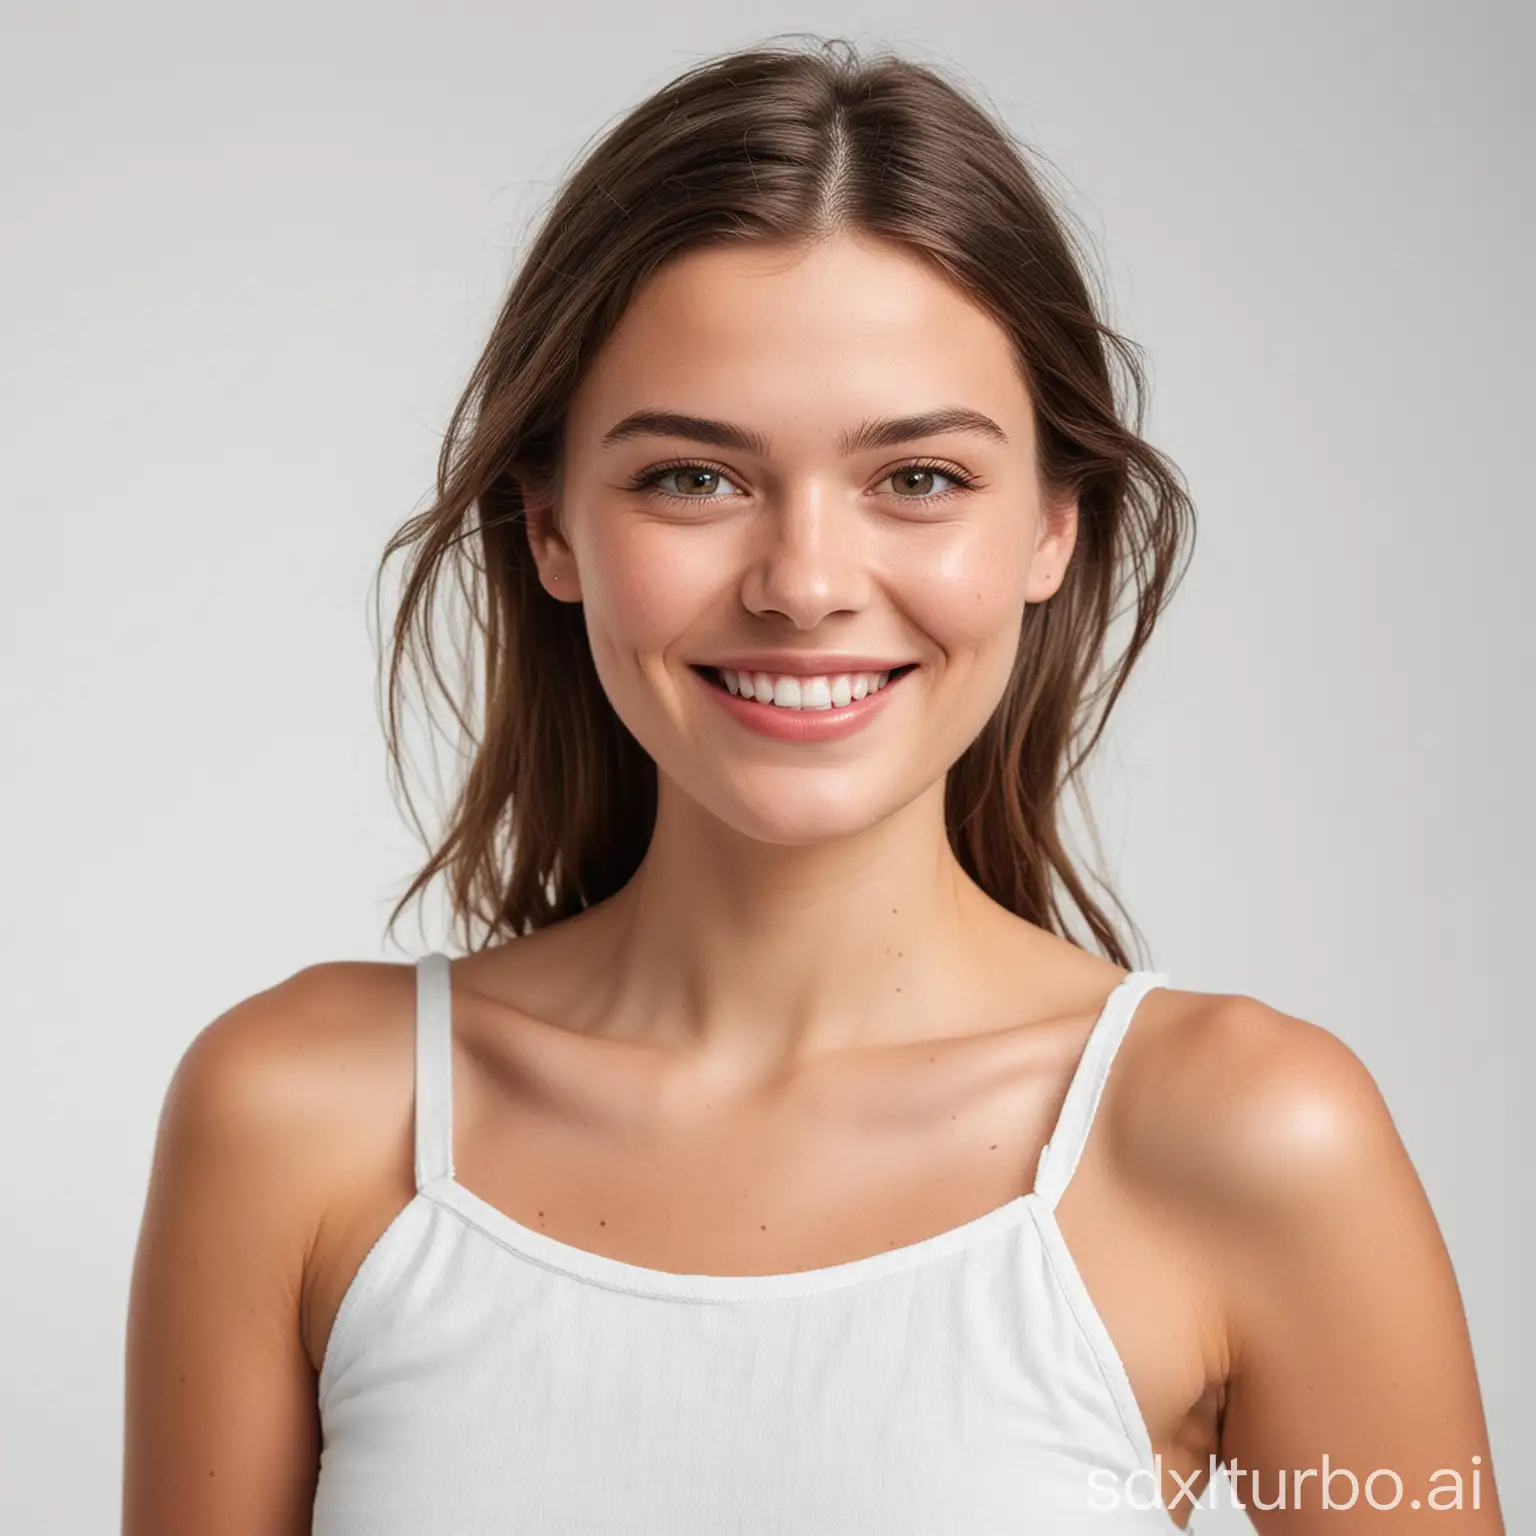 Smiling-Model-Poses-Against-White-Background